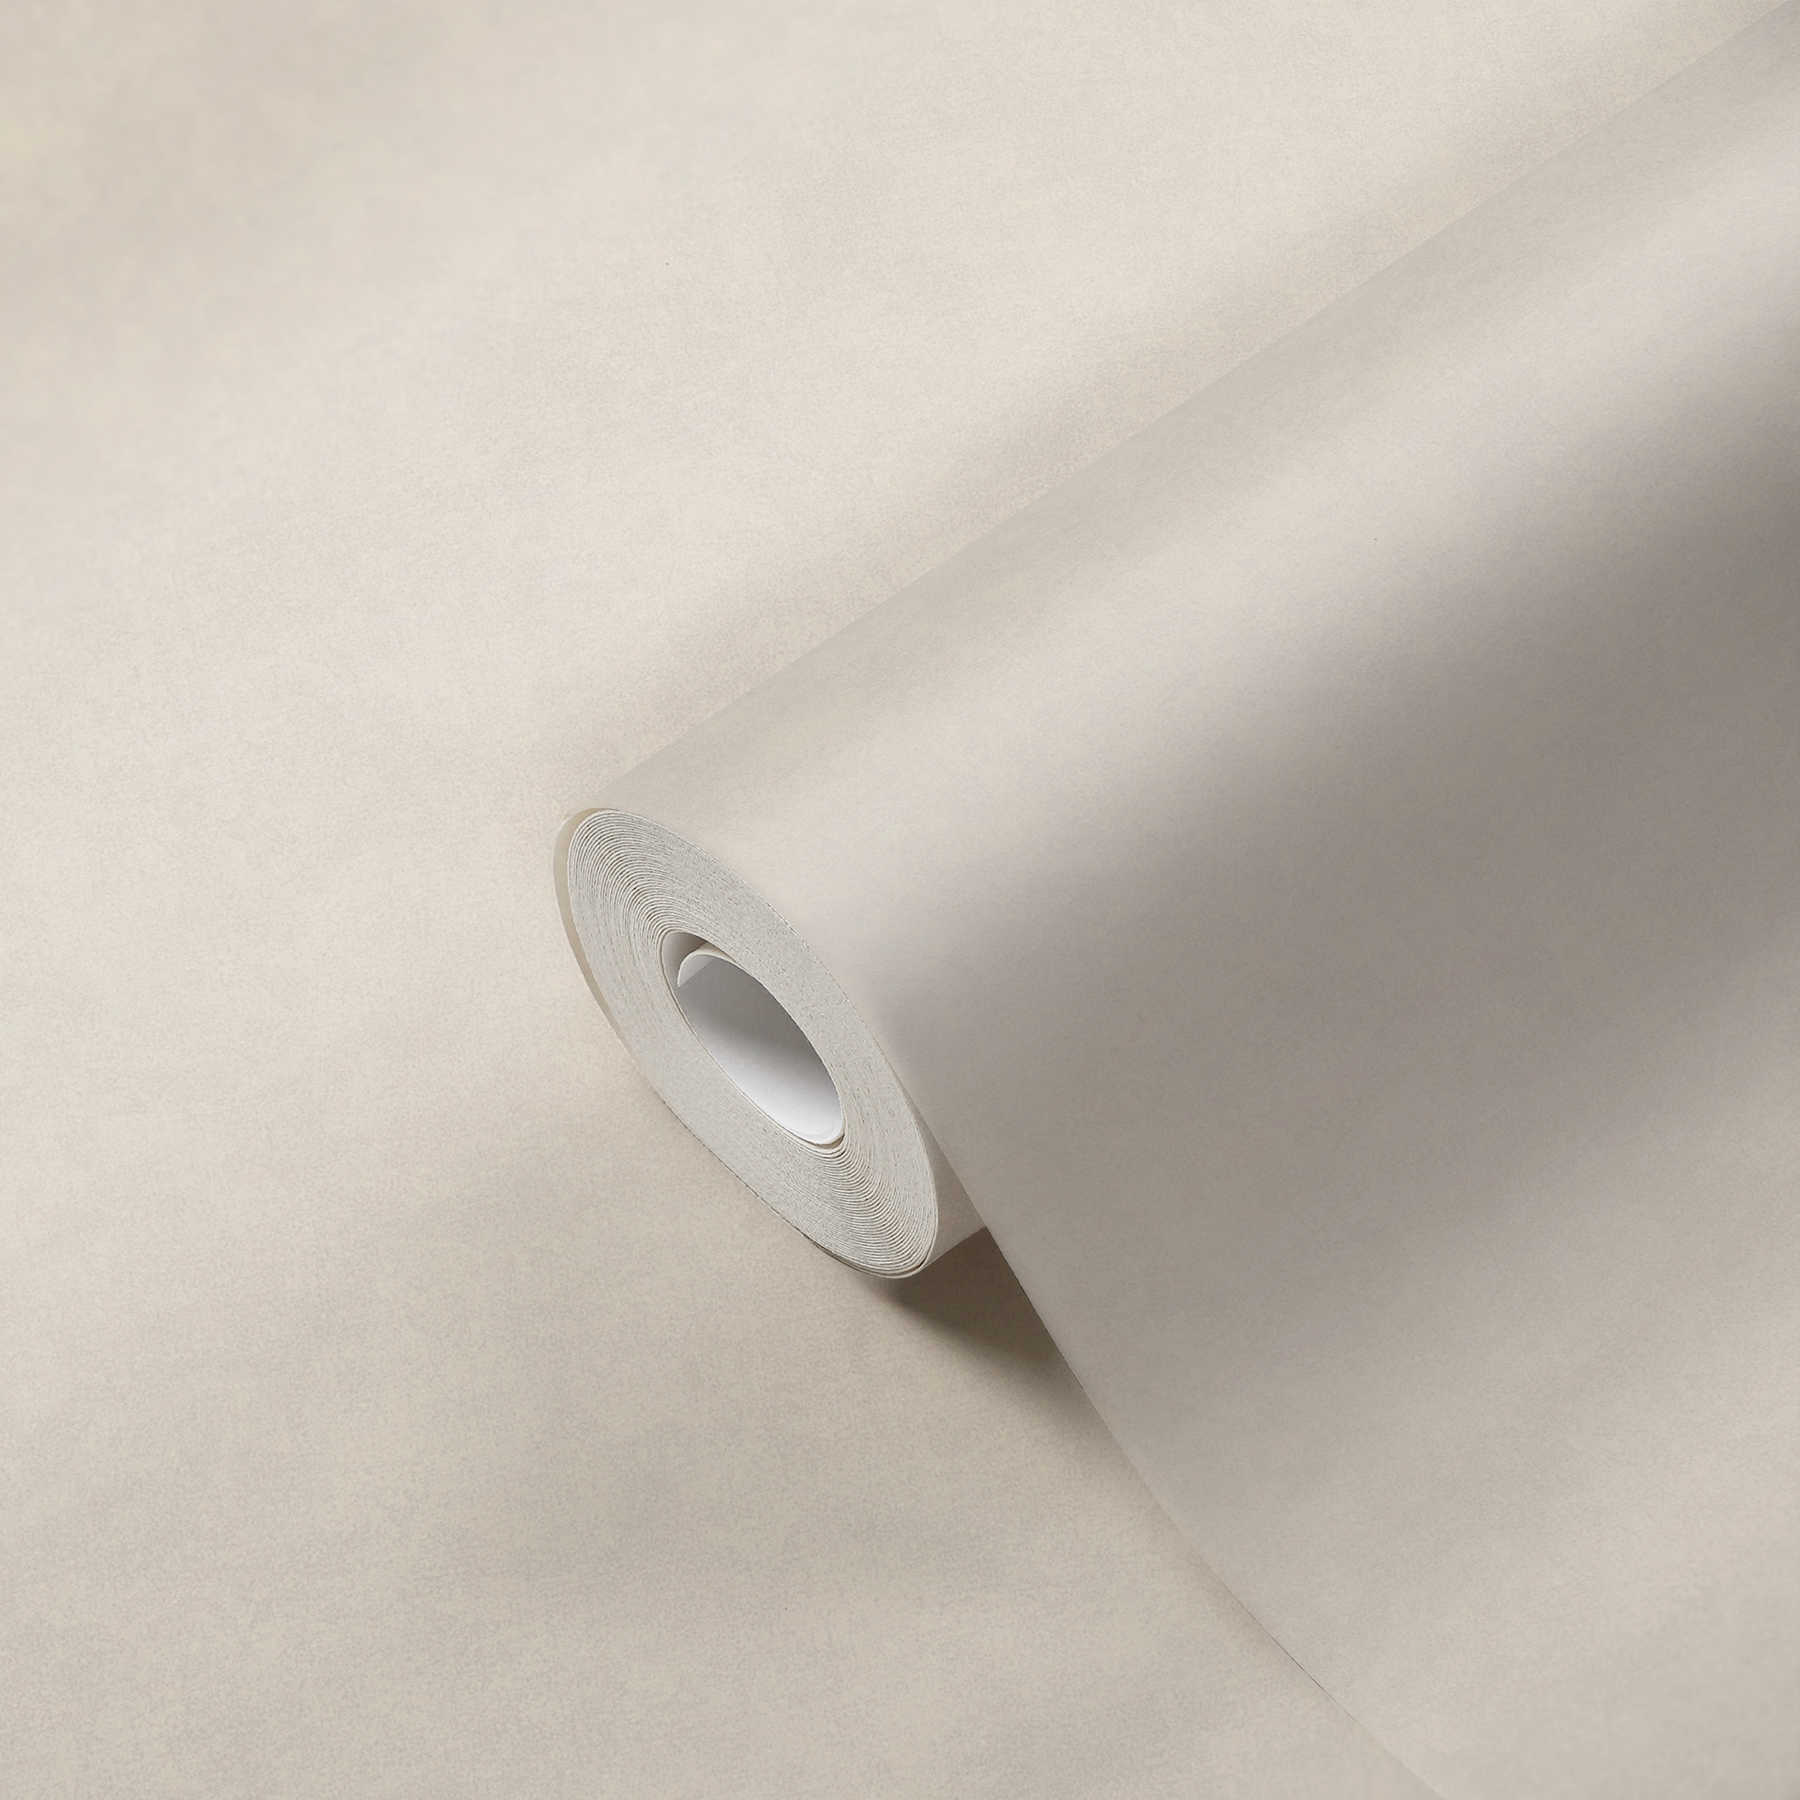             Plain non-woven wallpaper with subtle structure - cream
        